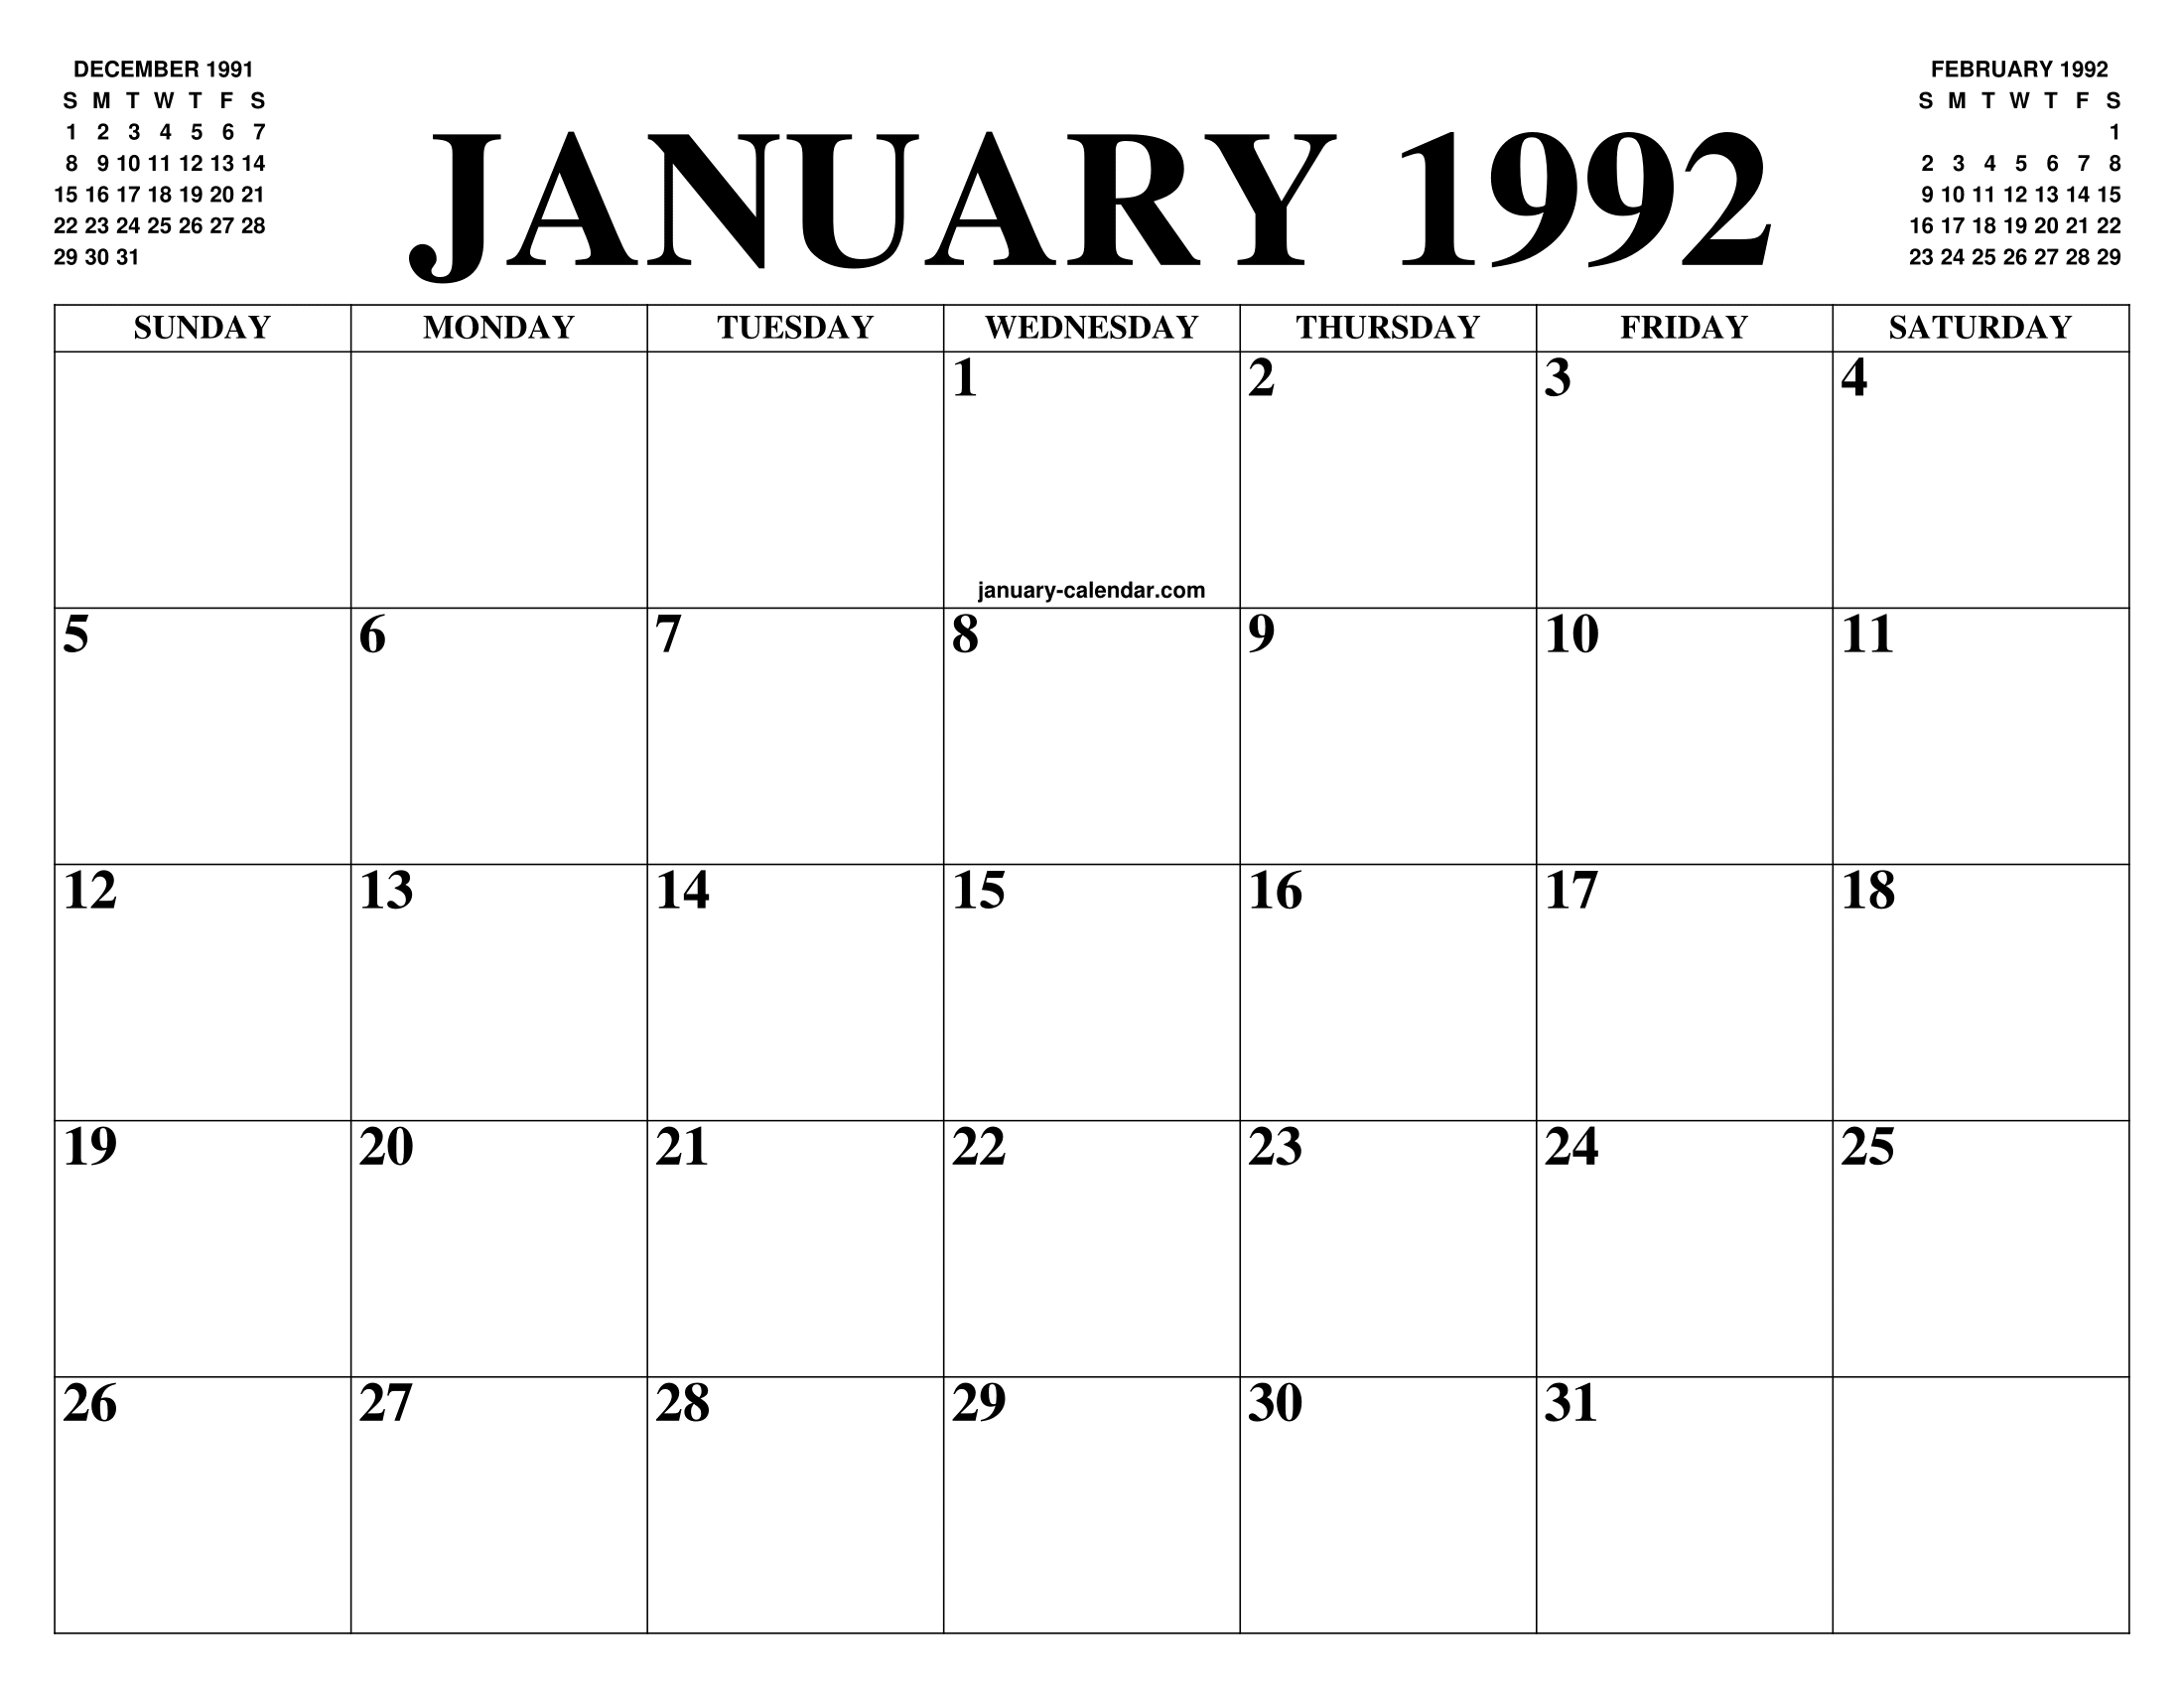 JANUARY 1992 CALENDAR OF THE MONTH FREE PRINTABLE JANUARY CALENDAR OF